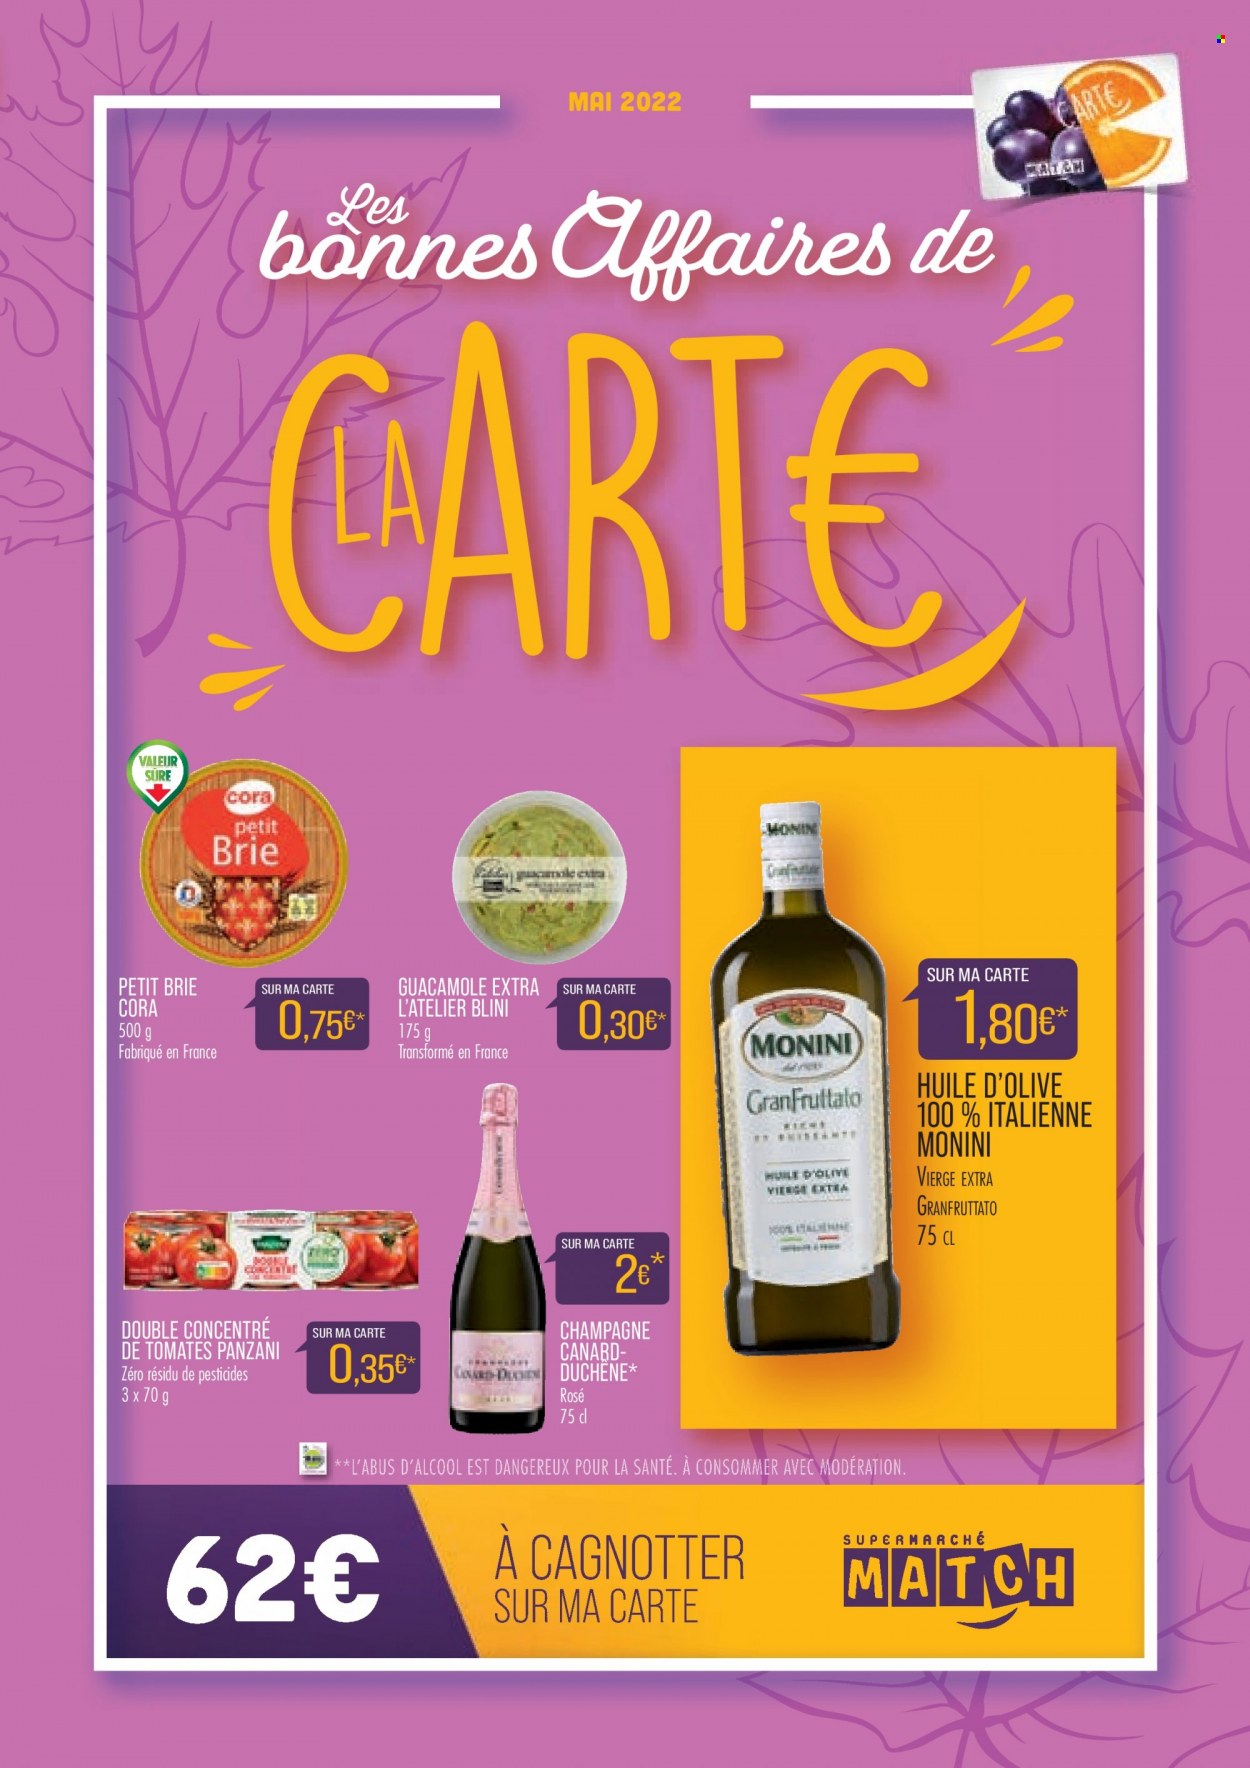 thumbnail - Catalogue Supermarché Match - 01/05/2022 - 31/05/2022 - Produits soldés - blini, Brie, Panzani, sauce tomate, guacamole, huile, huile d'olive vierge extra, huile d'olive, champagne. Page 1.